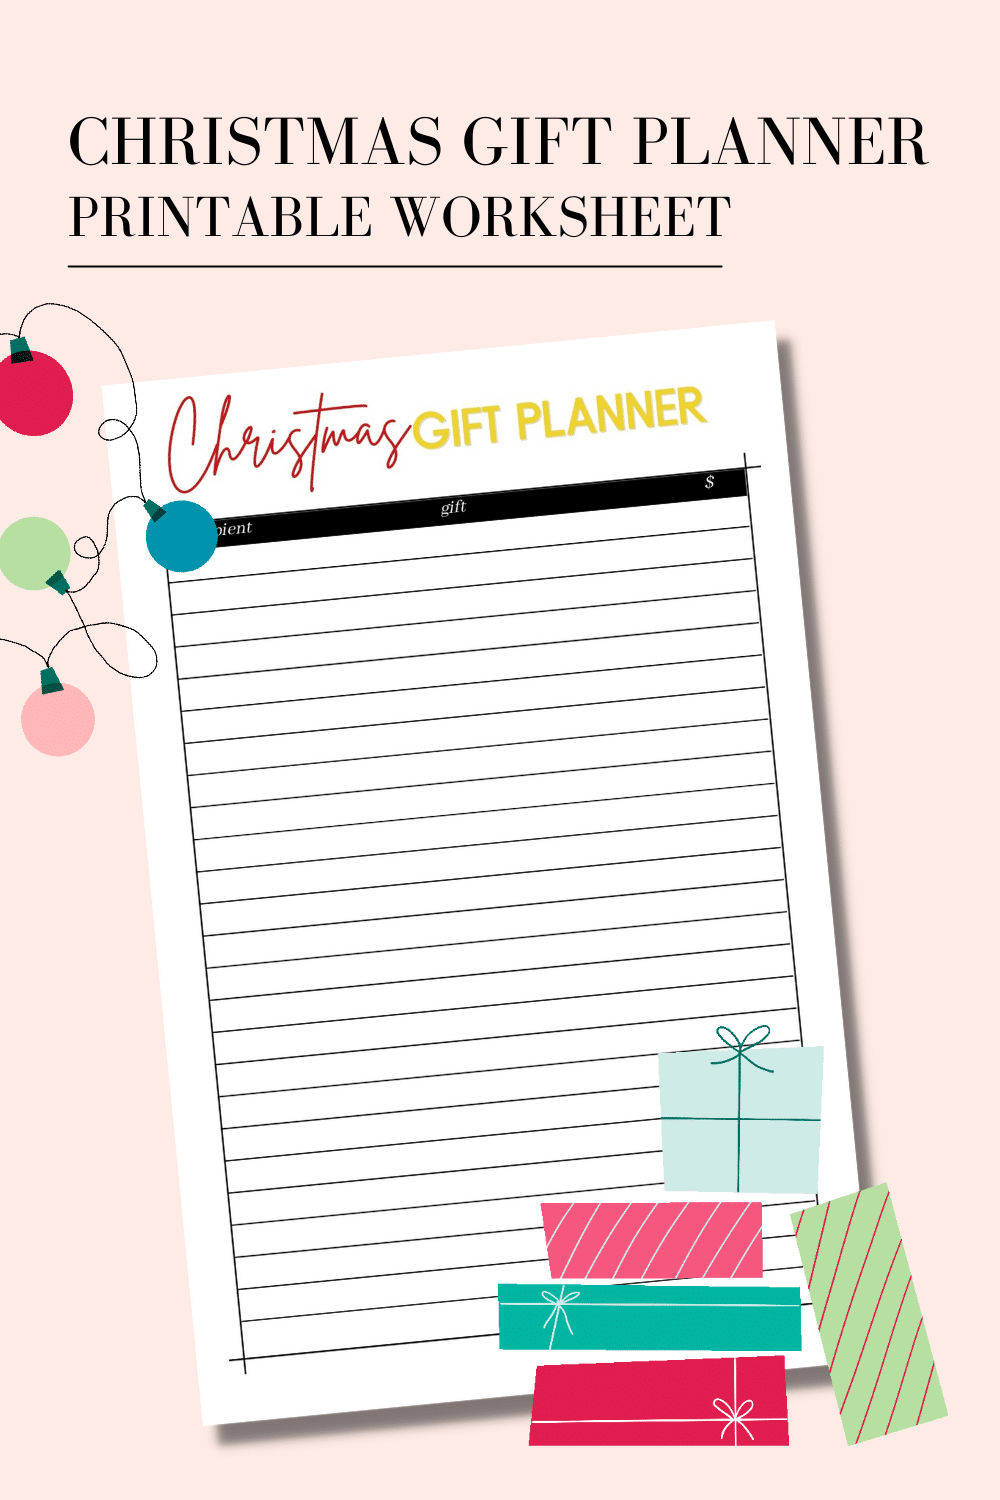 Free Printable Christmas Gift Planner Worksheet 2021